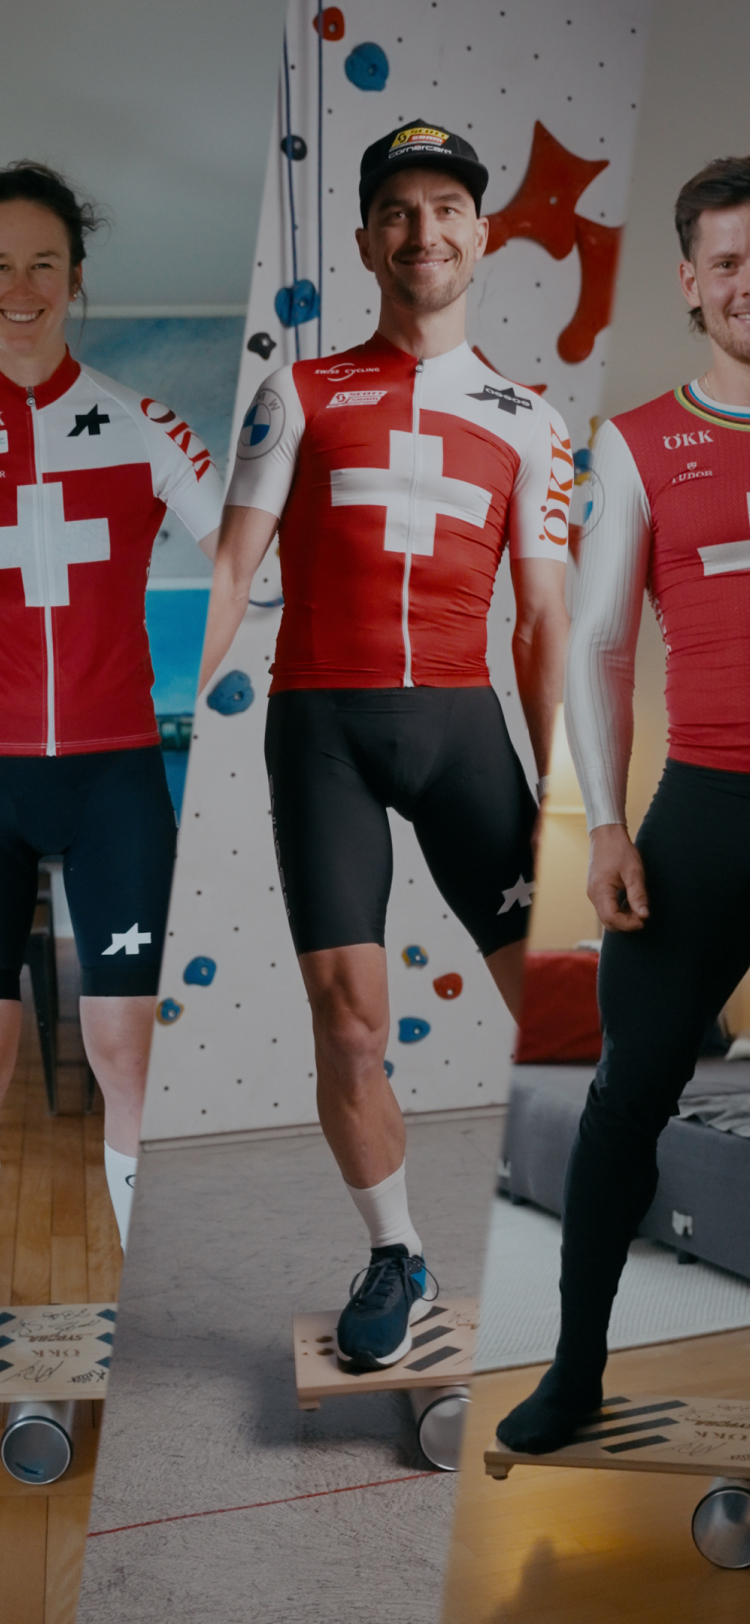 Swiss Cycling Athlet*innen auf Balance-Boards